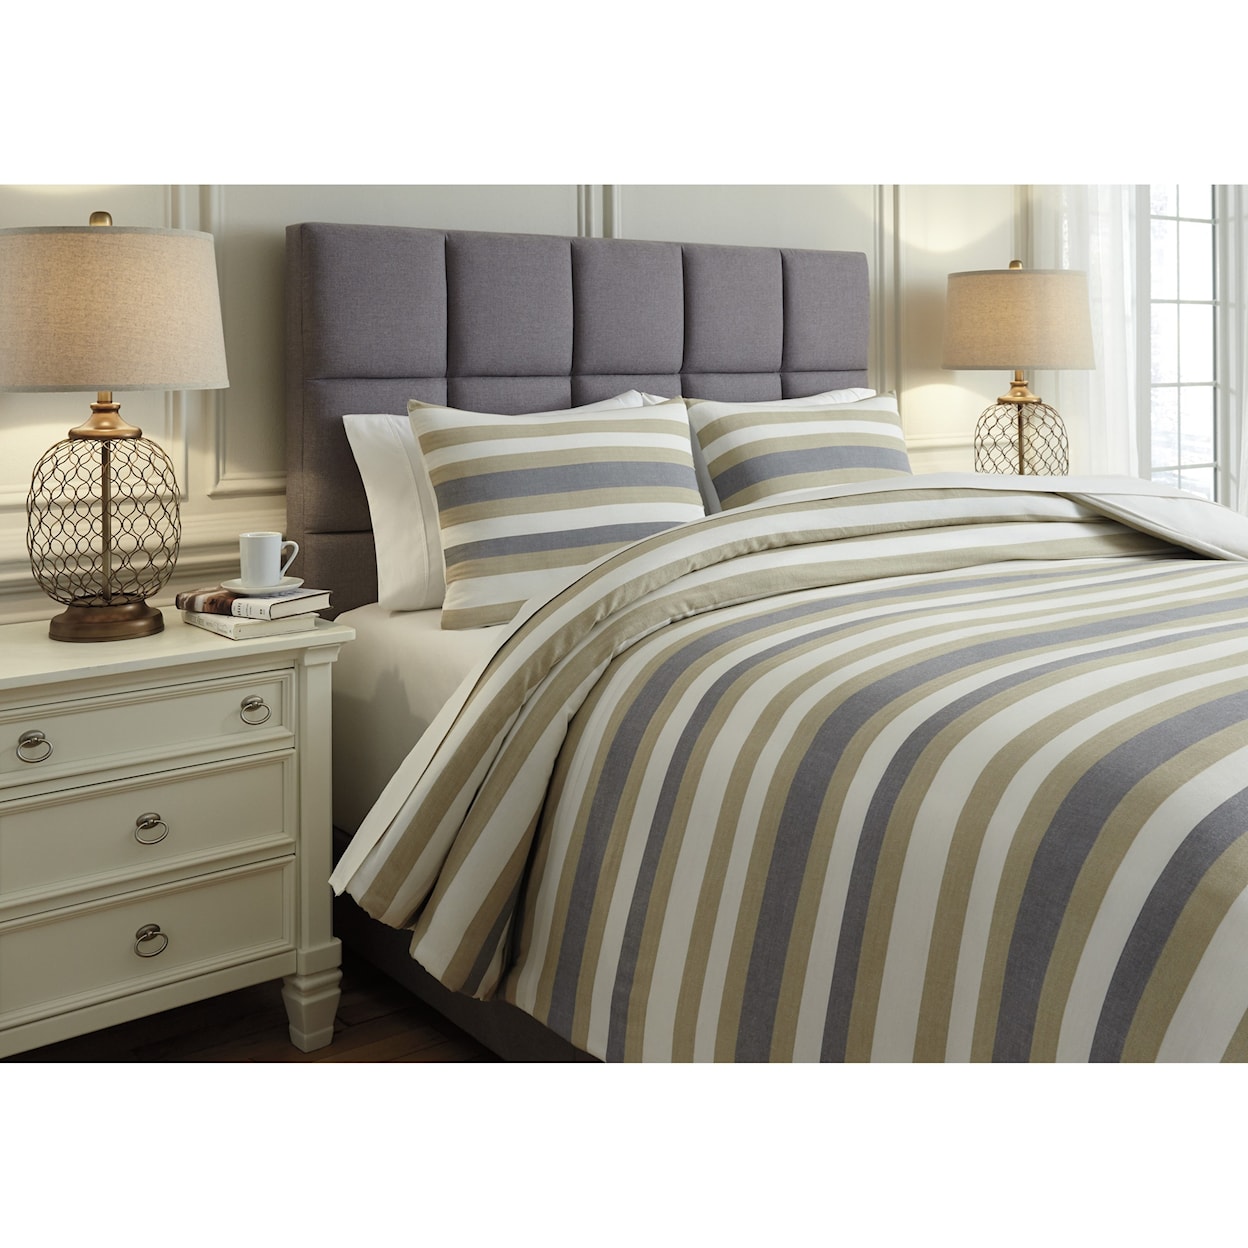 Ashley Furniture Signature Design Bedding Sets Queen Isaiah Gray/Tan Comforter Set